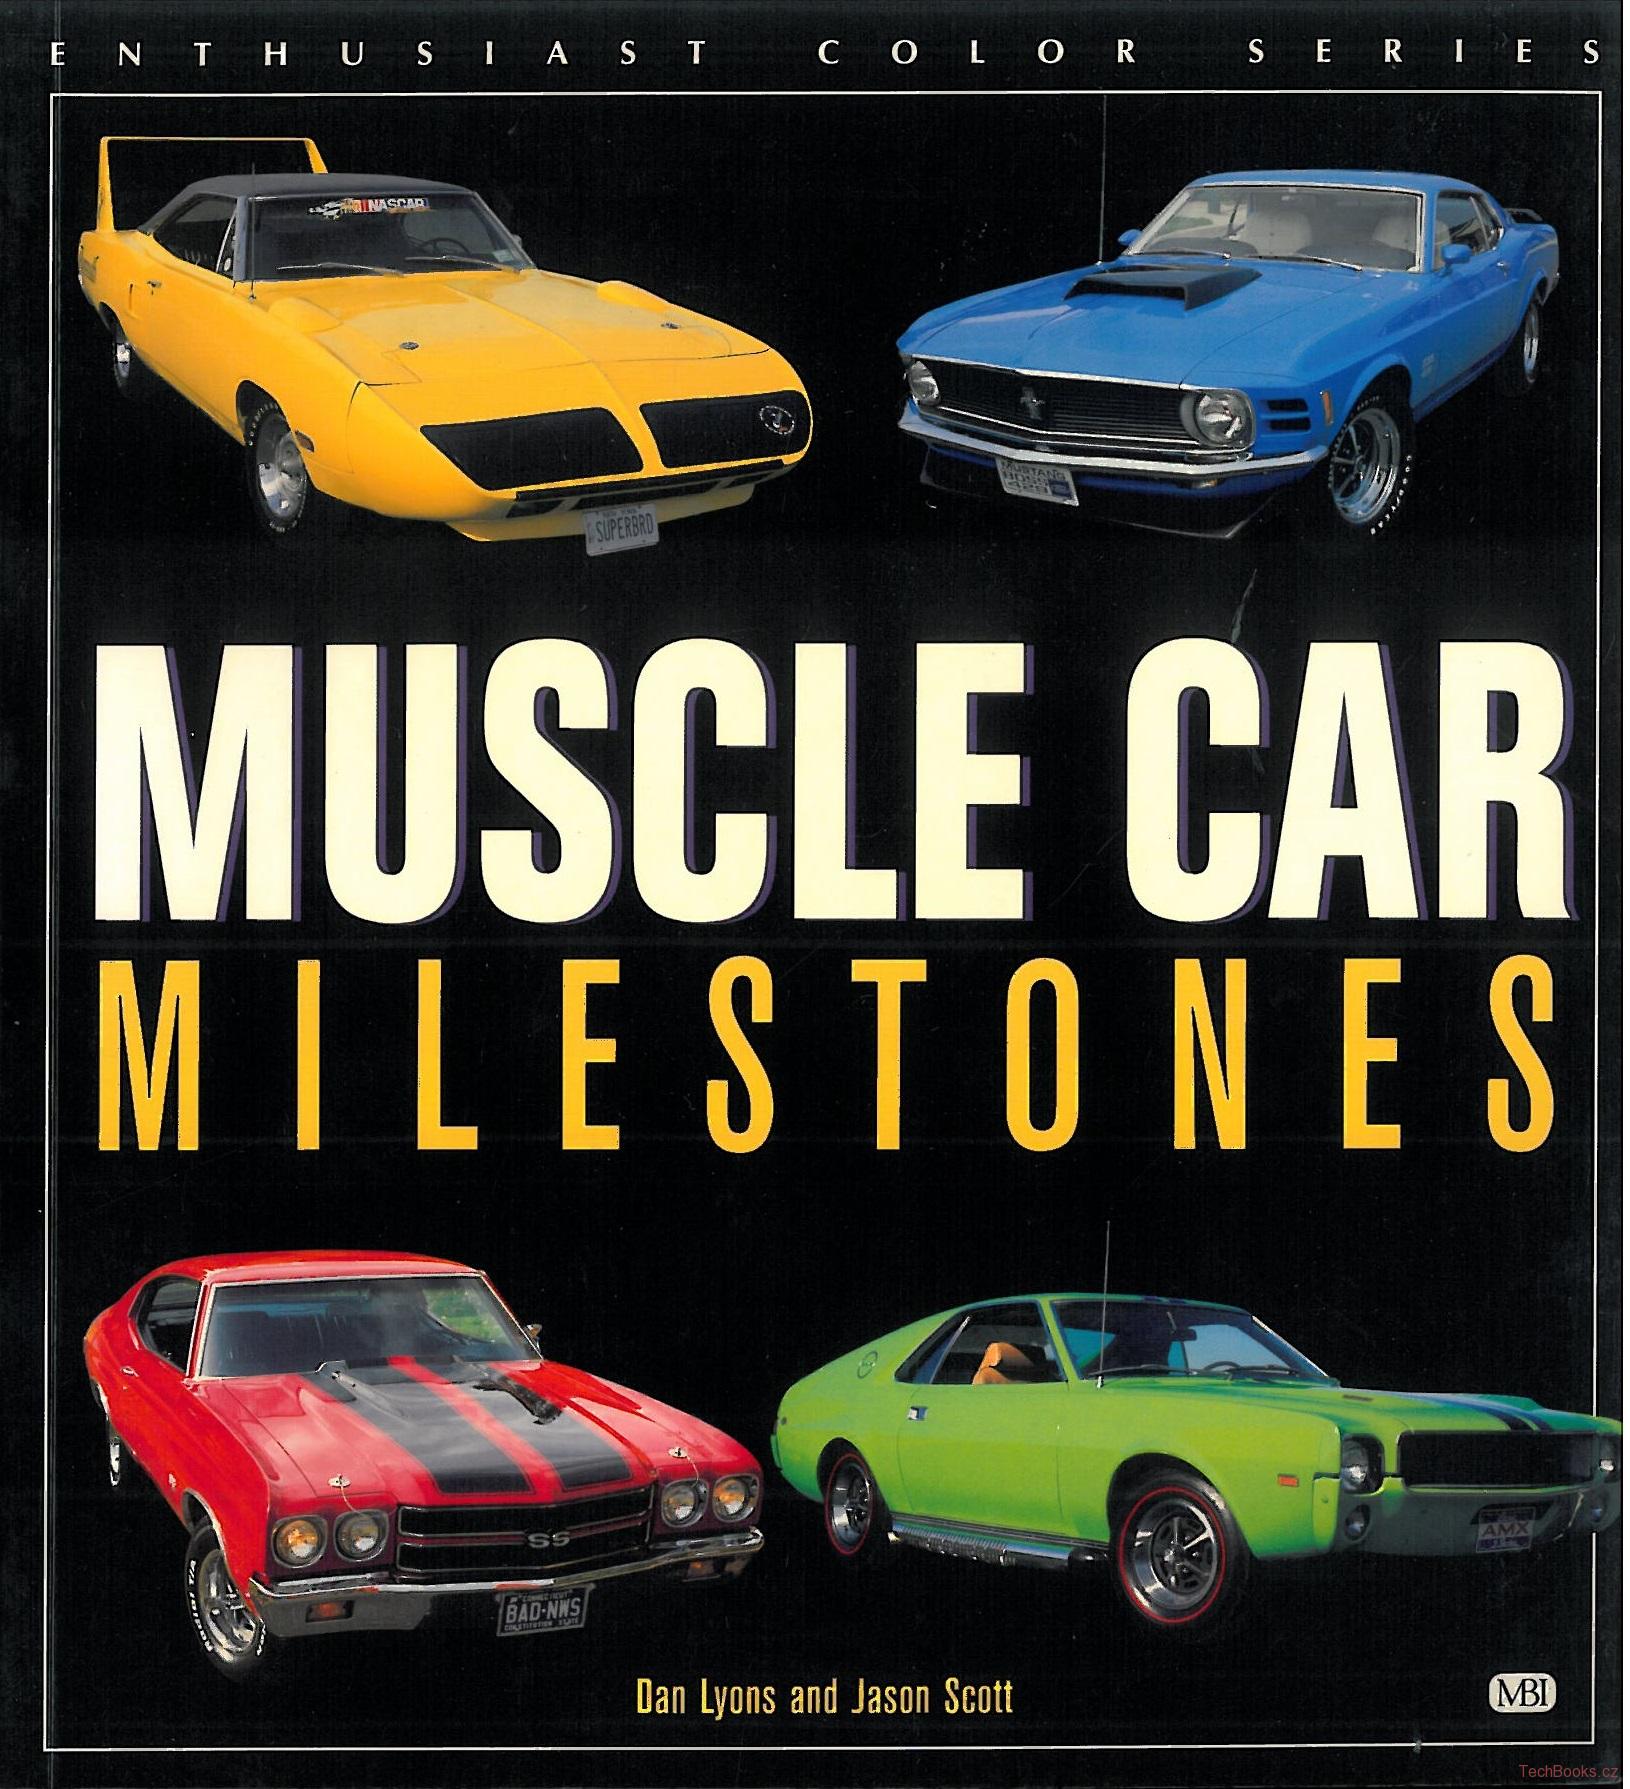 Muscle Car Milestones